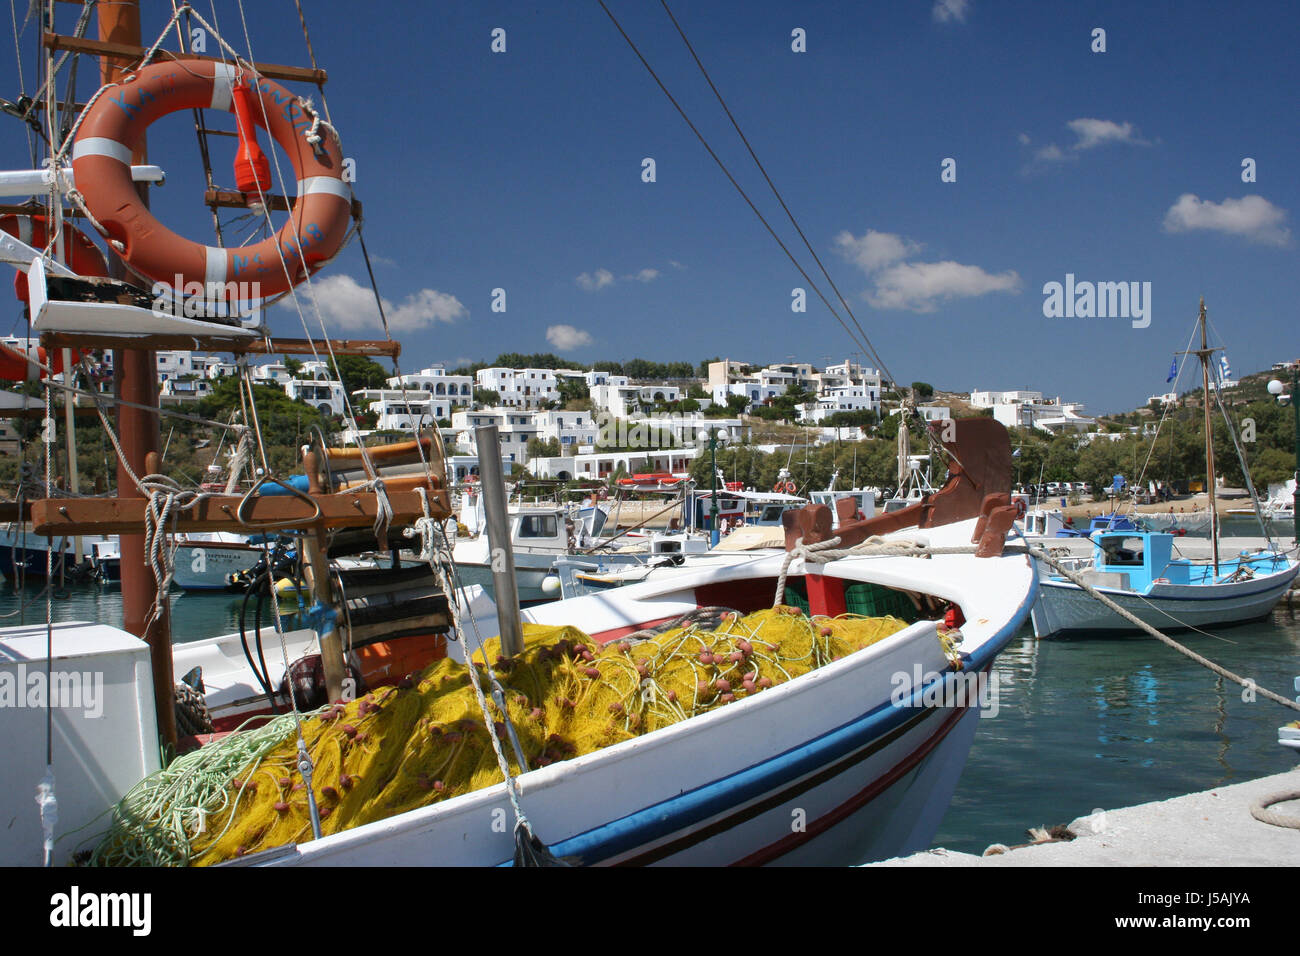 Baum Bäume Griechenland Mietskasernen Angeln Boot Boote Segelboot Segelboot blau Stockfoto